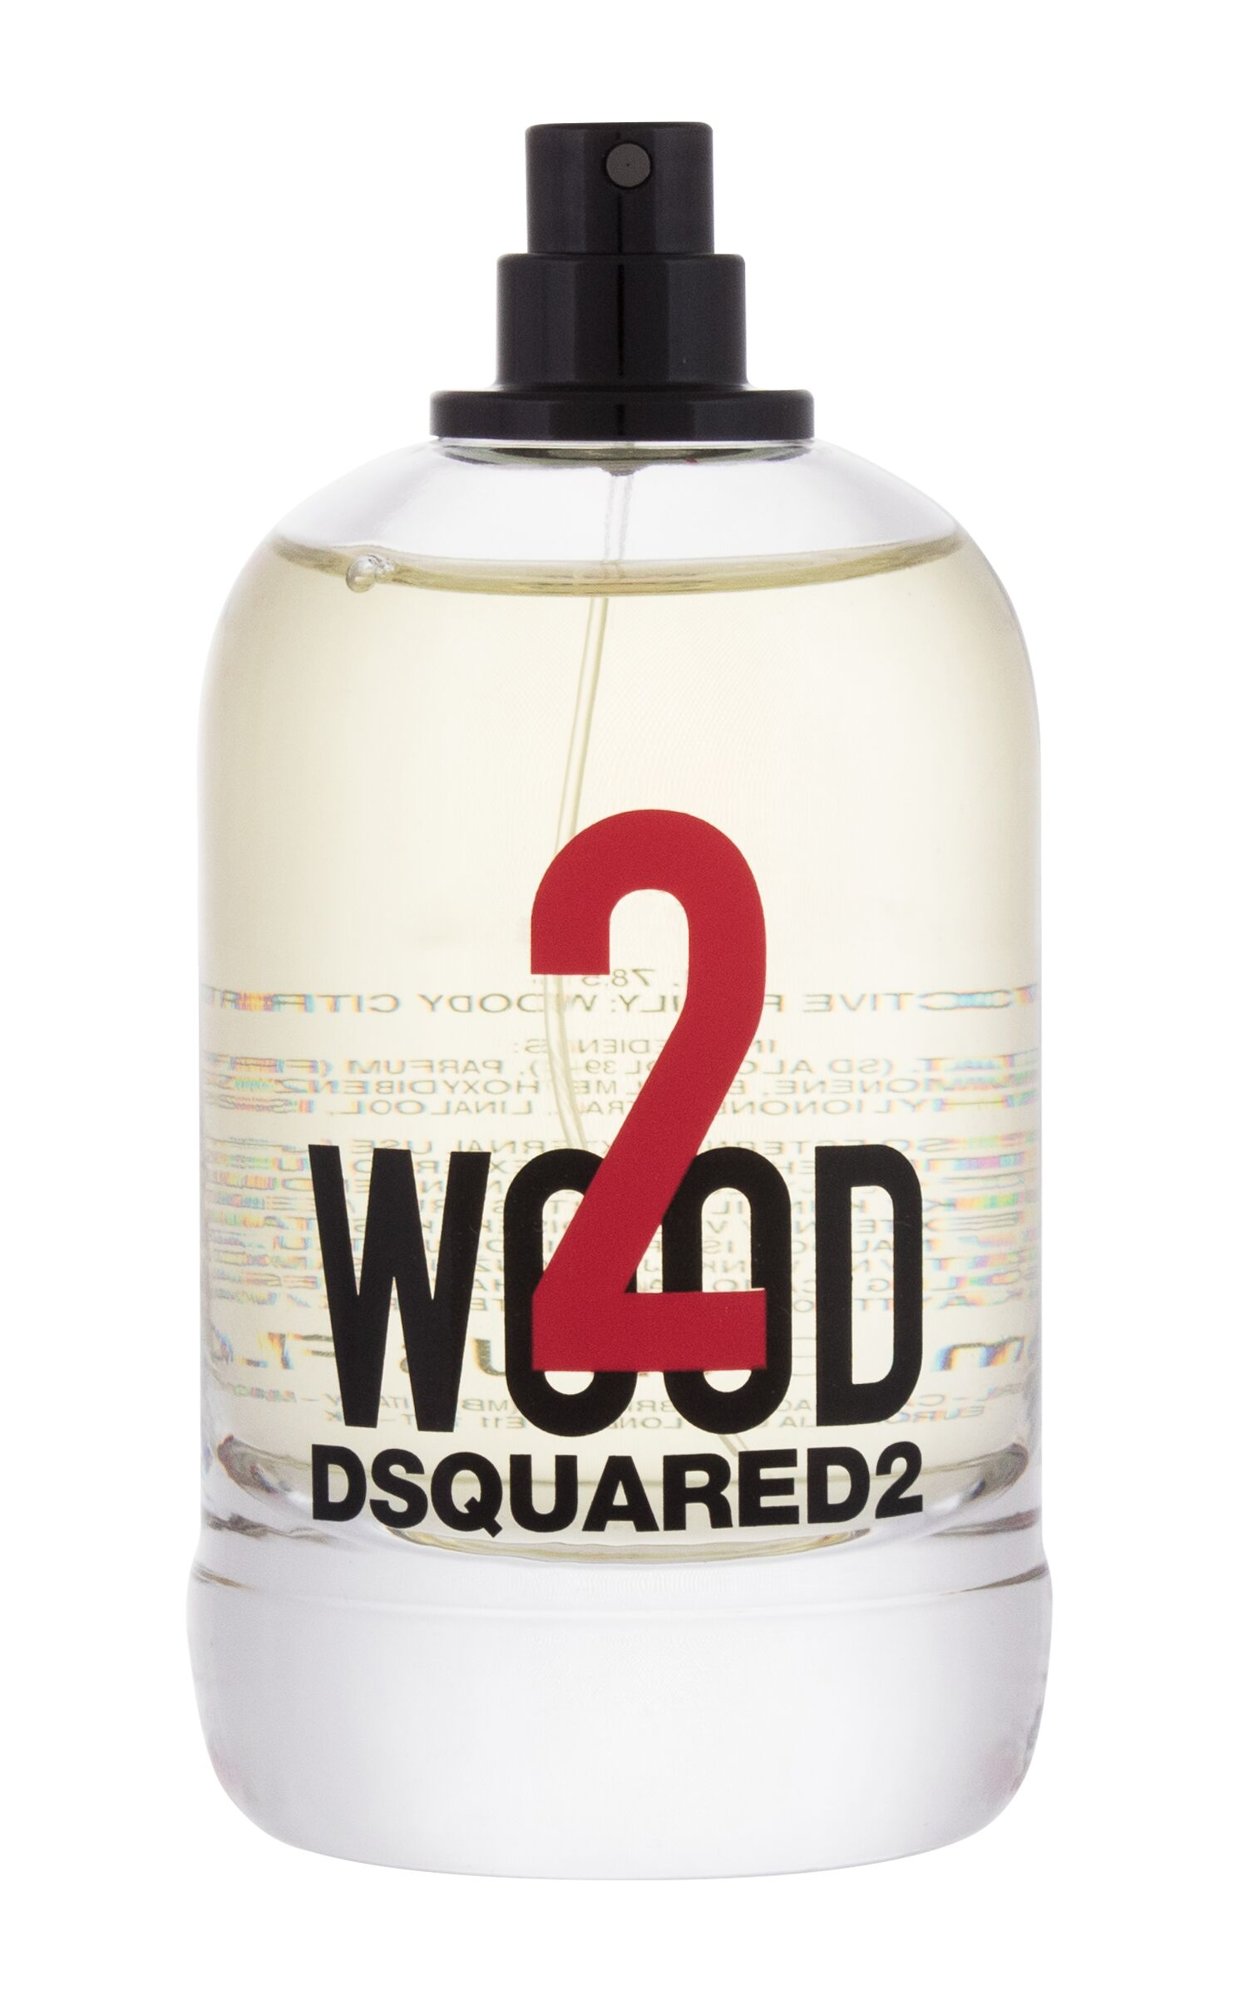 Dsquared2 2 Wood, Toaletná voda 100ml, Tester